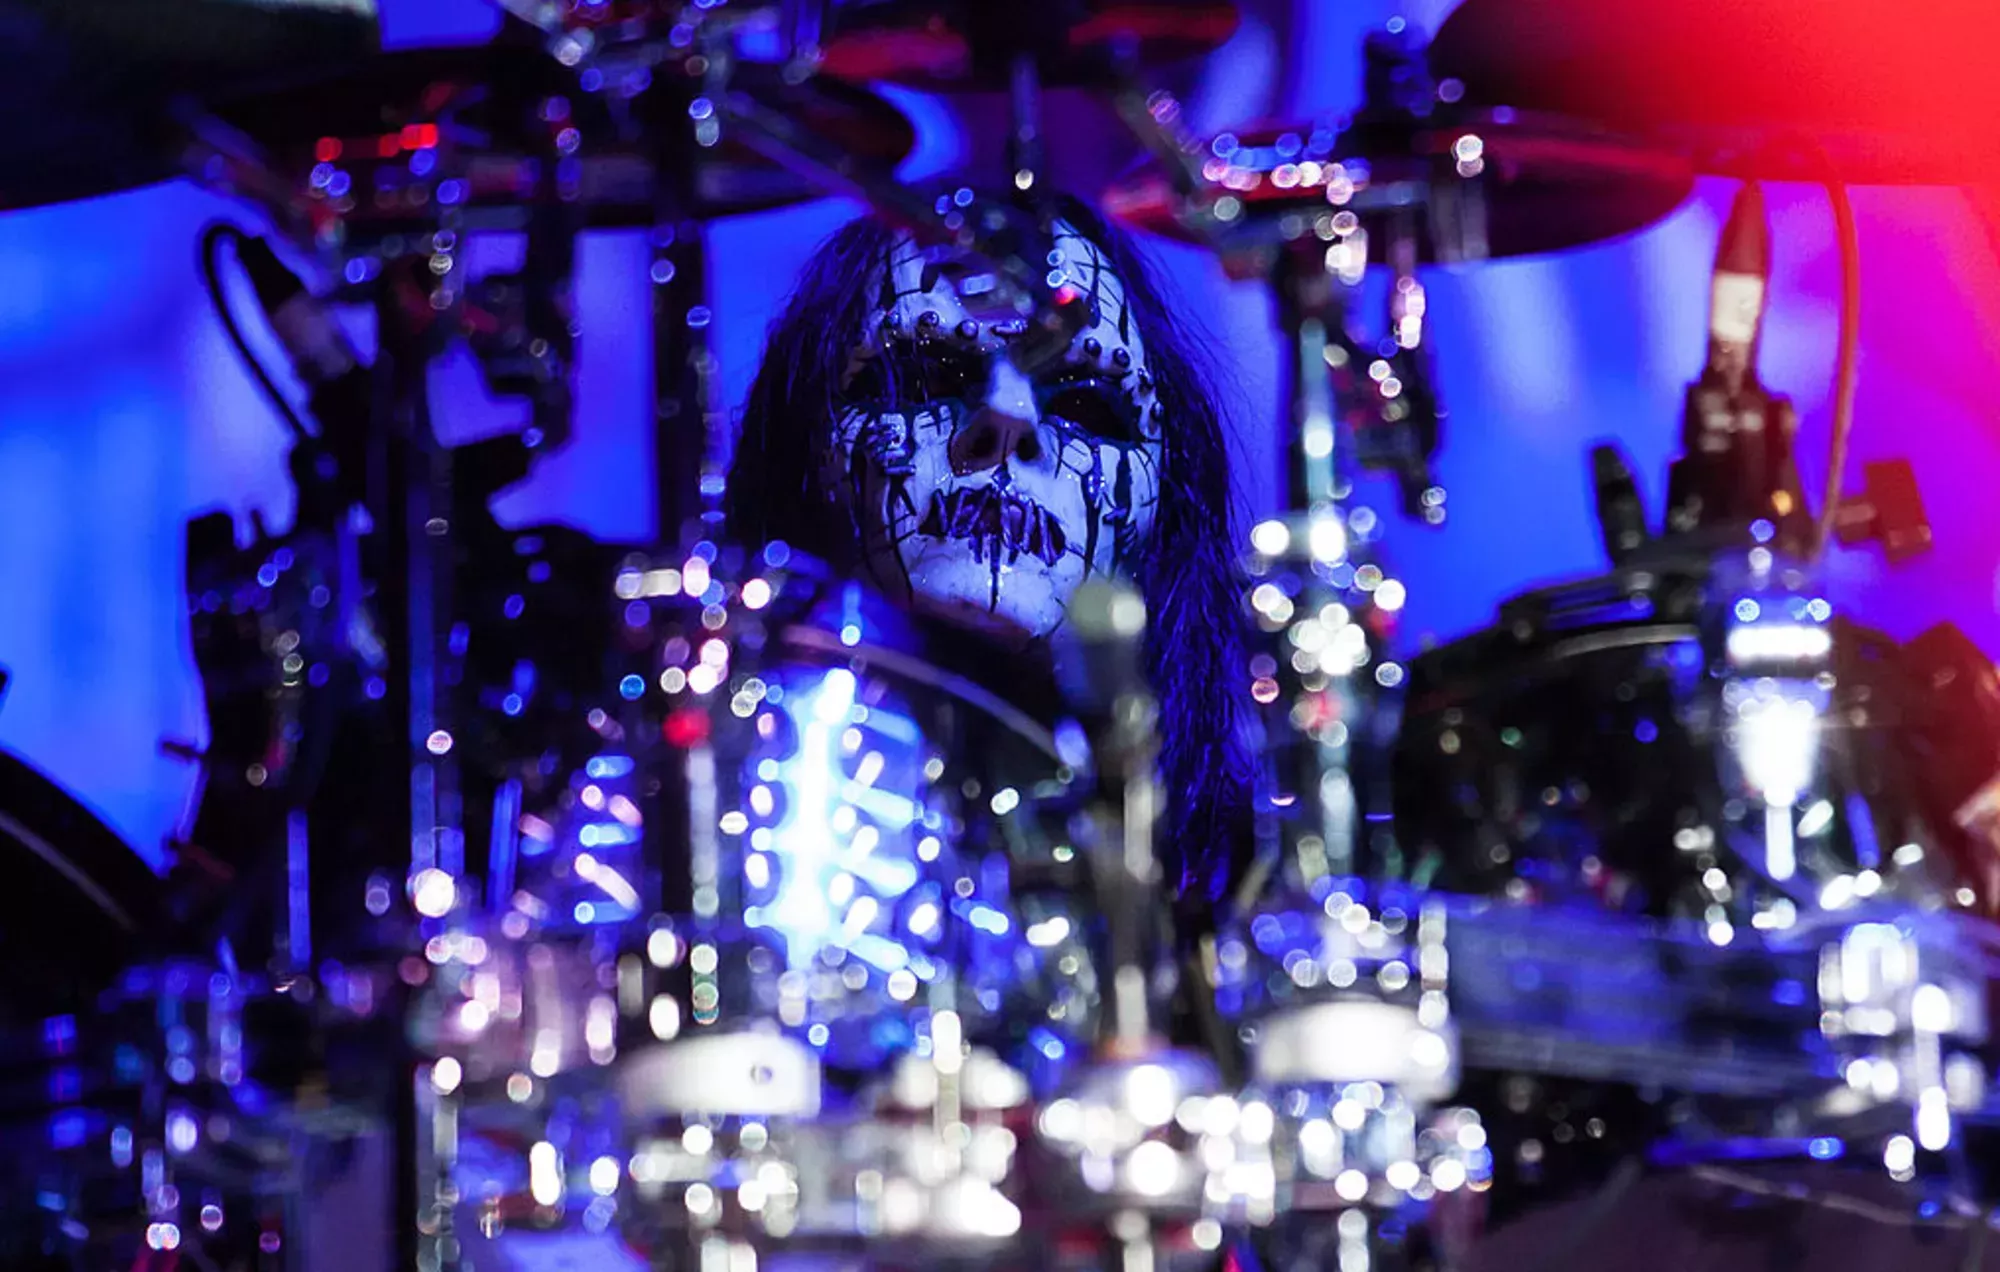 Joey Jordison recordado por el A&R de Roadrunner que fichó a Slipknot